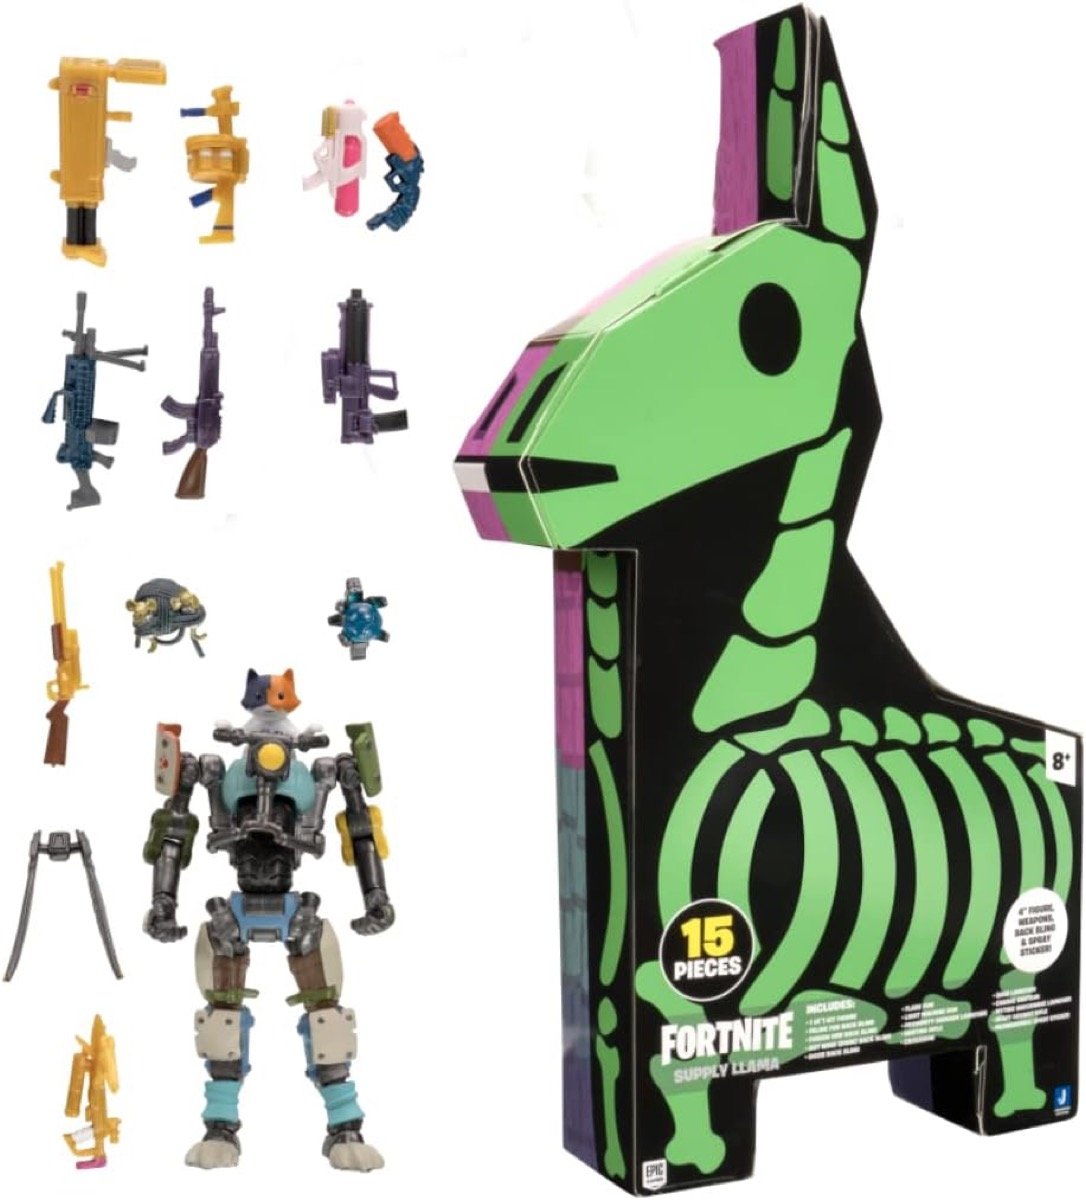 An X-ray "fortnite" loot llama with gun figurines